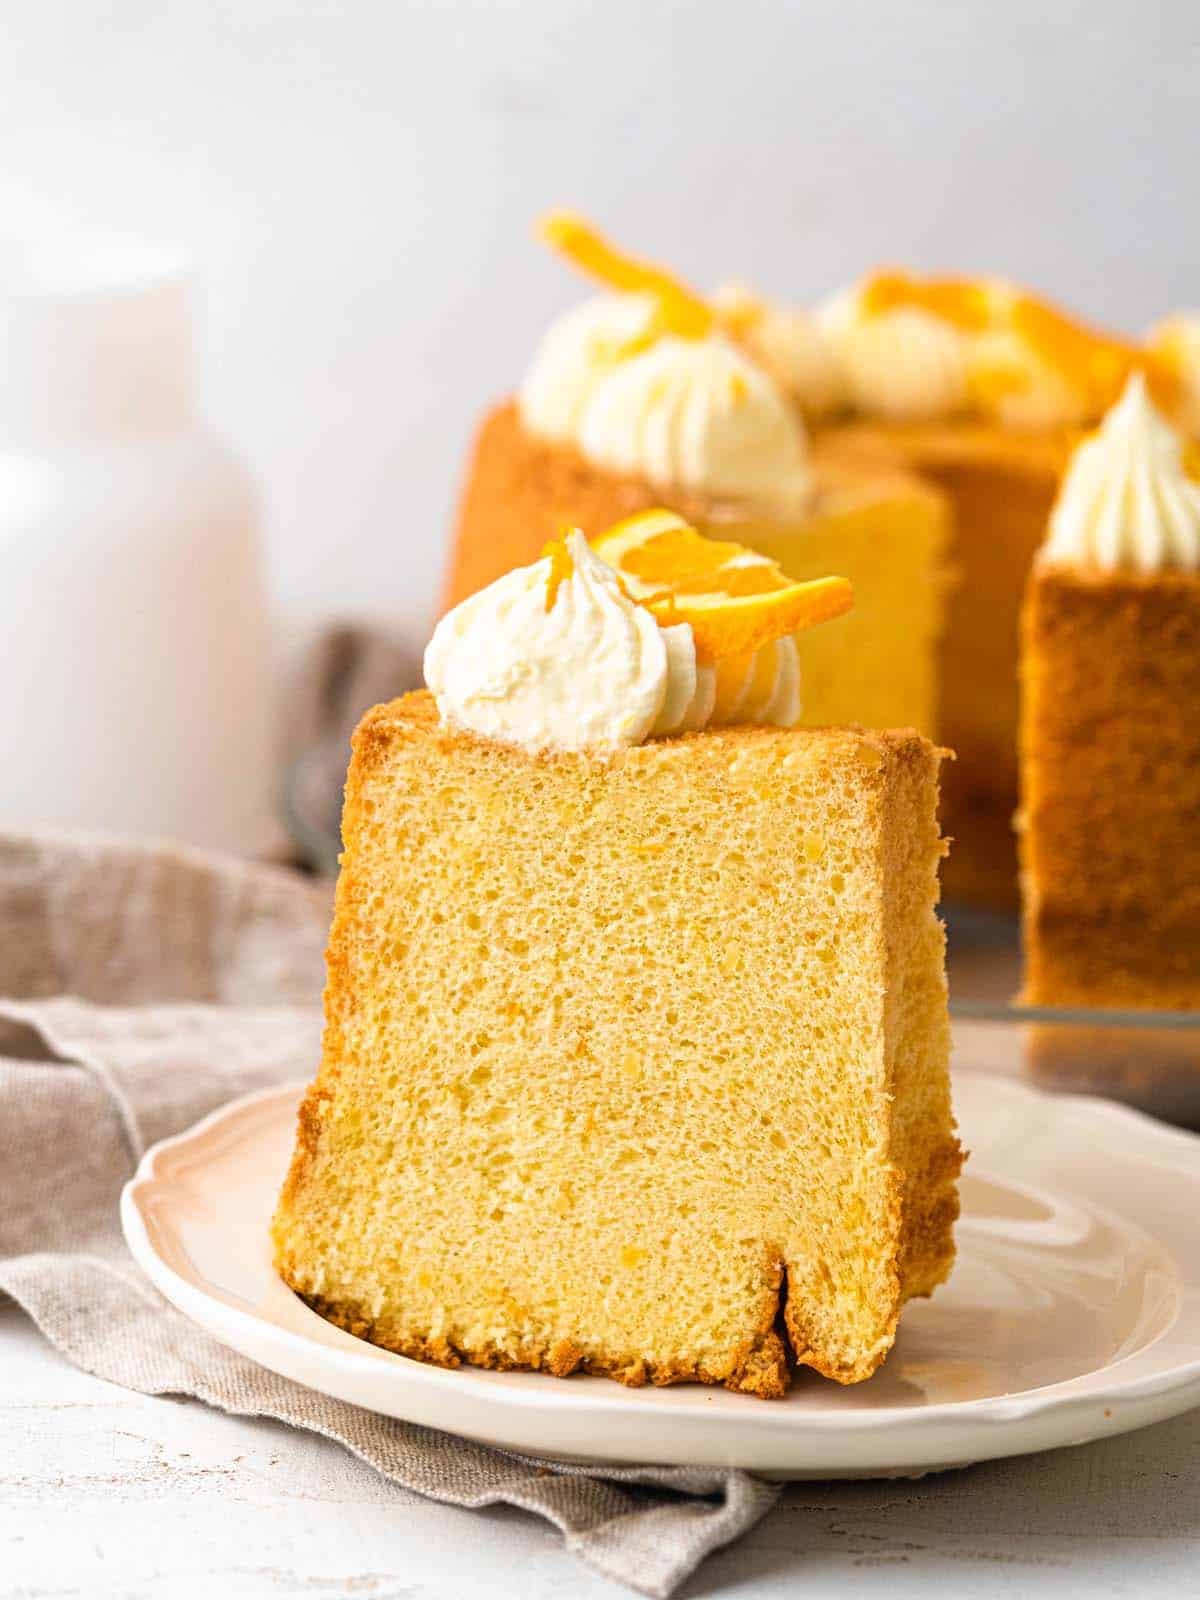 Orange chiffon cake topped with whipped cream